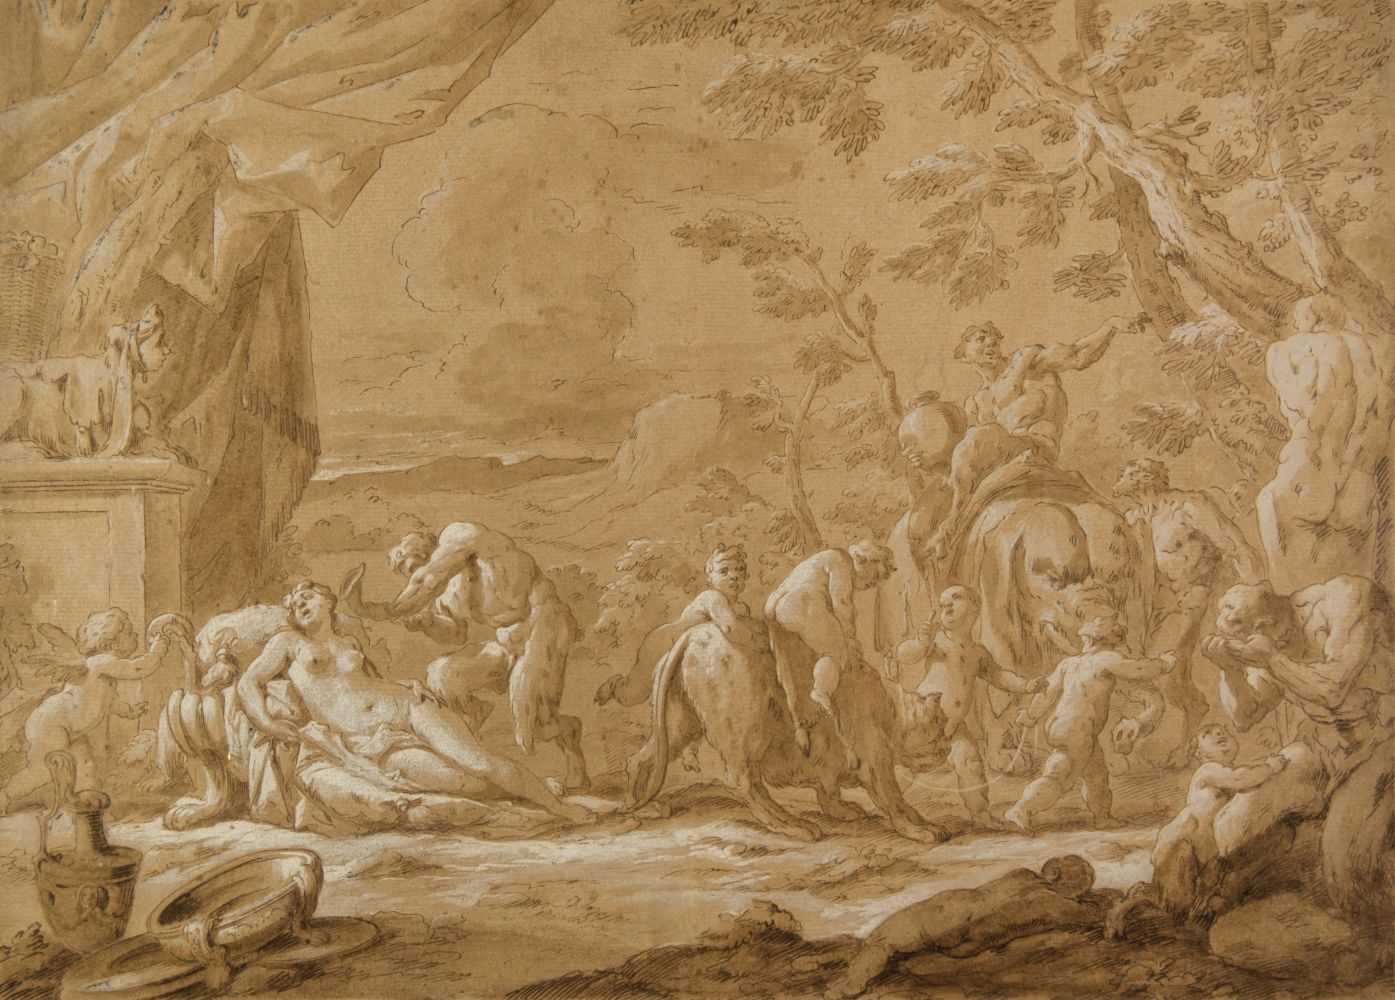 Lot 375 - Venetian School. Bacchanalian scene with sleeping Venus, Cupid and Satyr, early 18th century